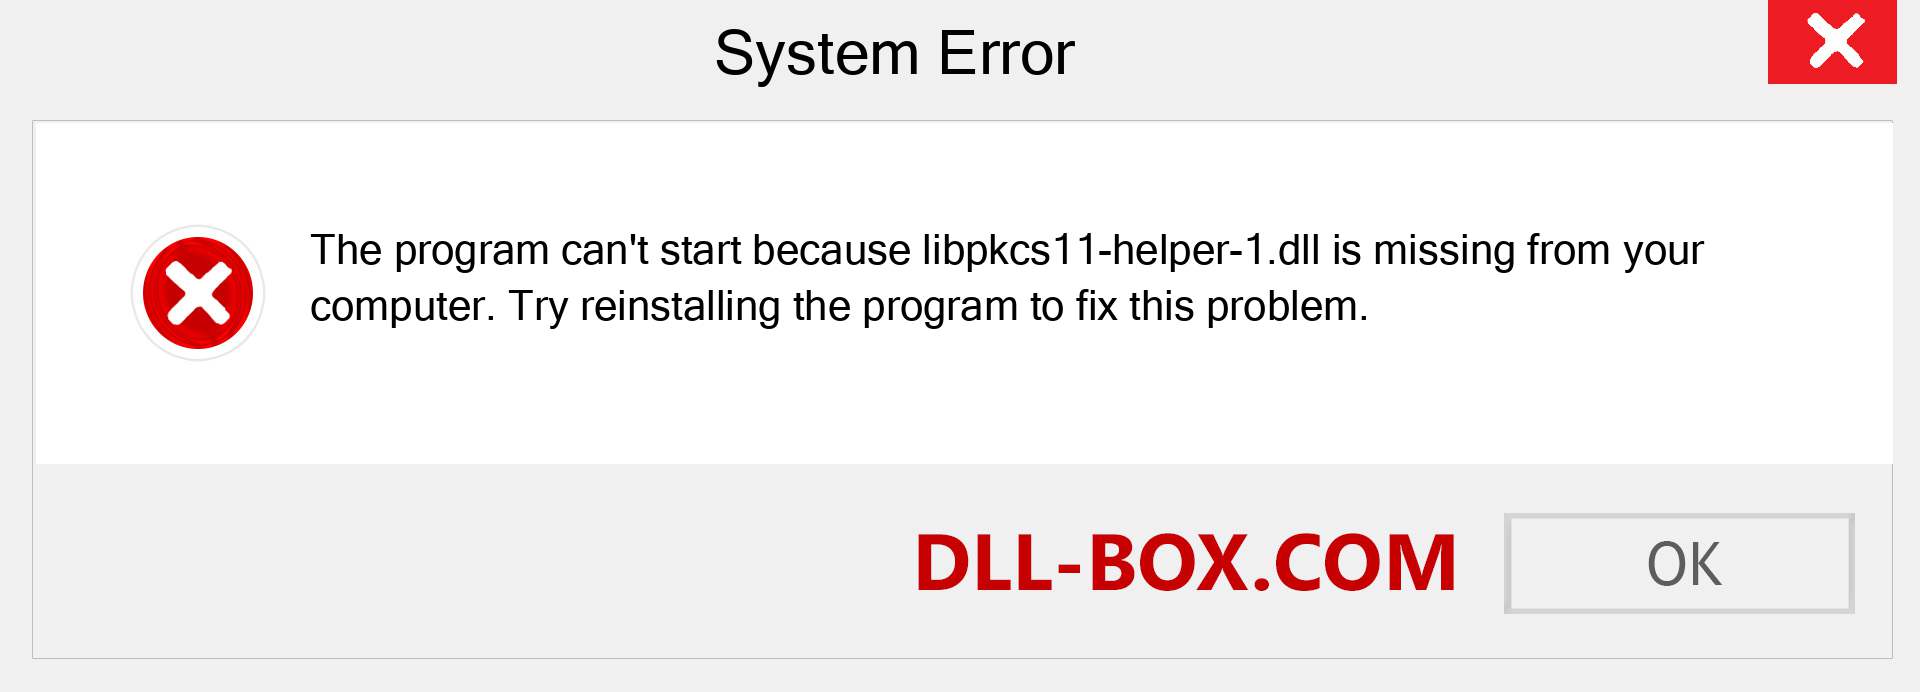  libpkcs11-helper-1.dll file is missing?. Download for Windows 7, 8, 10 - Fix  libpkcs11-helper-1 dll Missing Error on Windows, photos, images